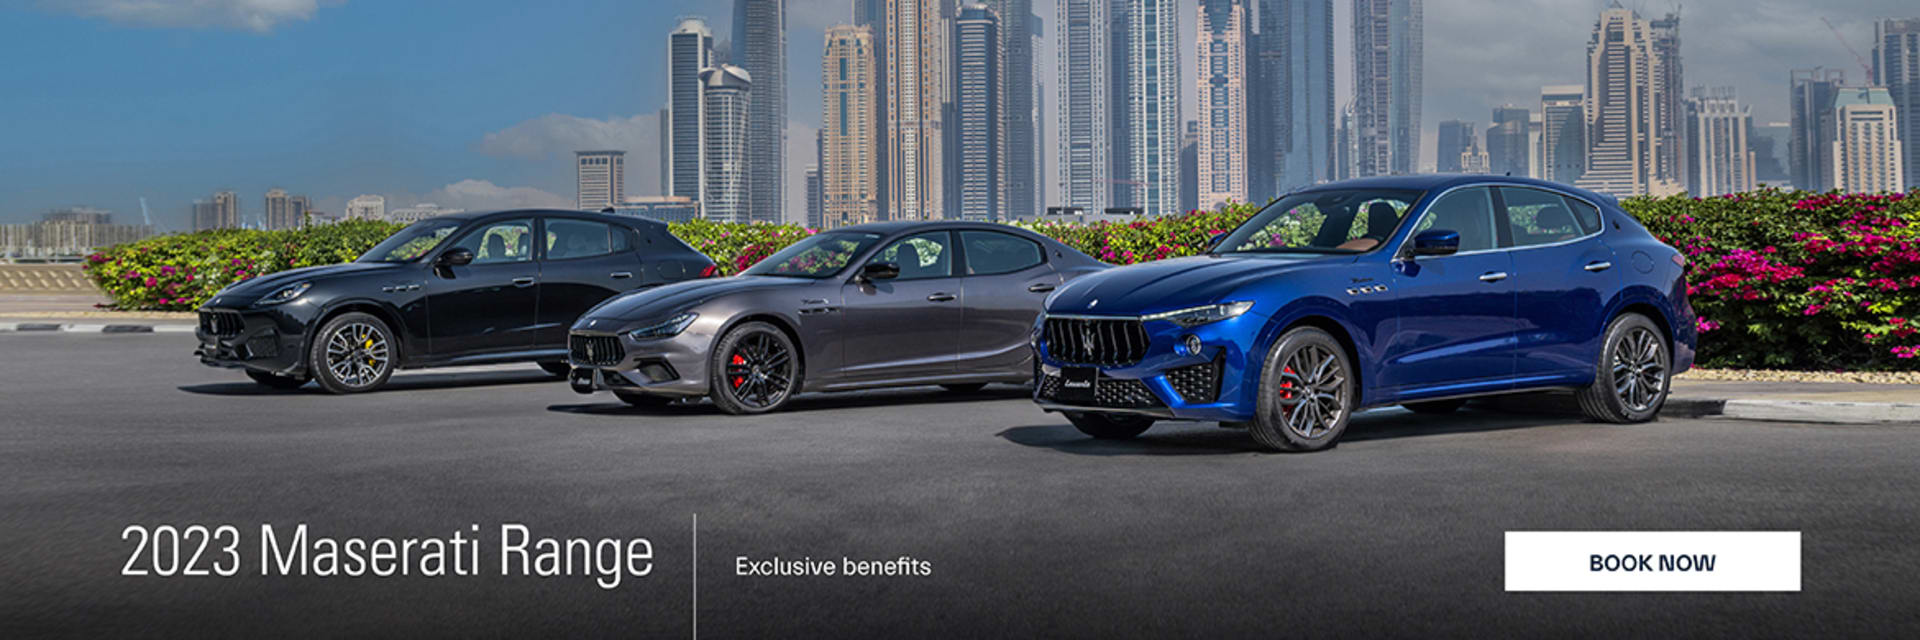 Maserati Range Offers